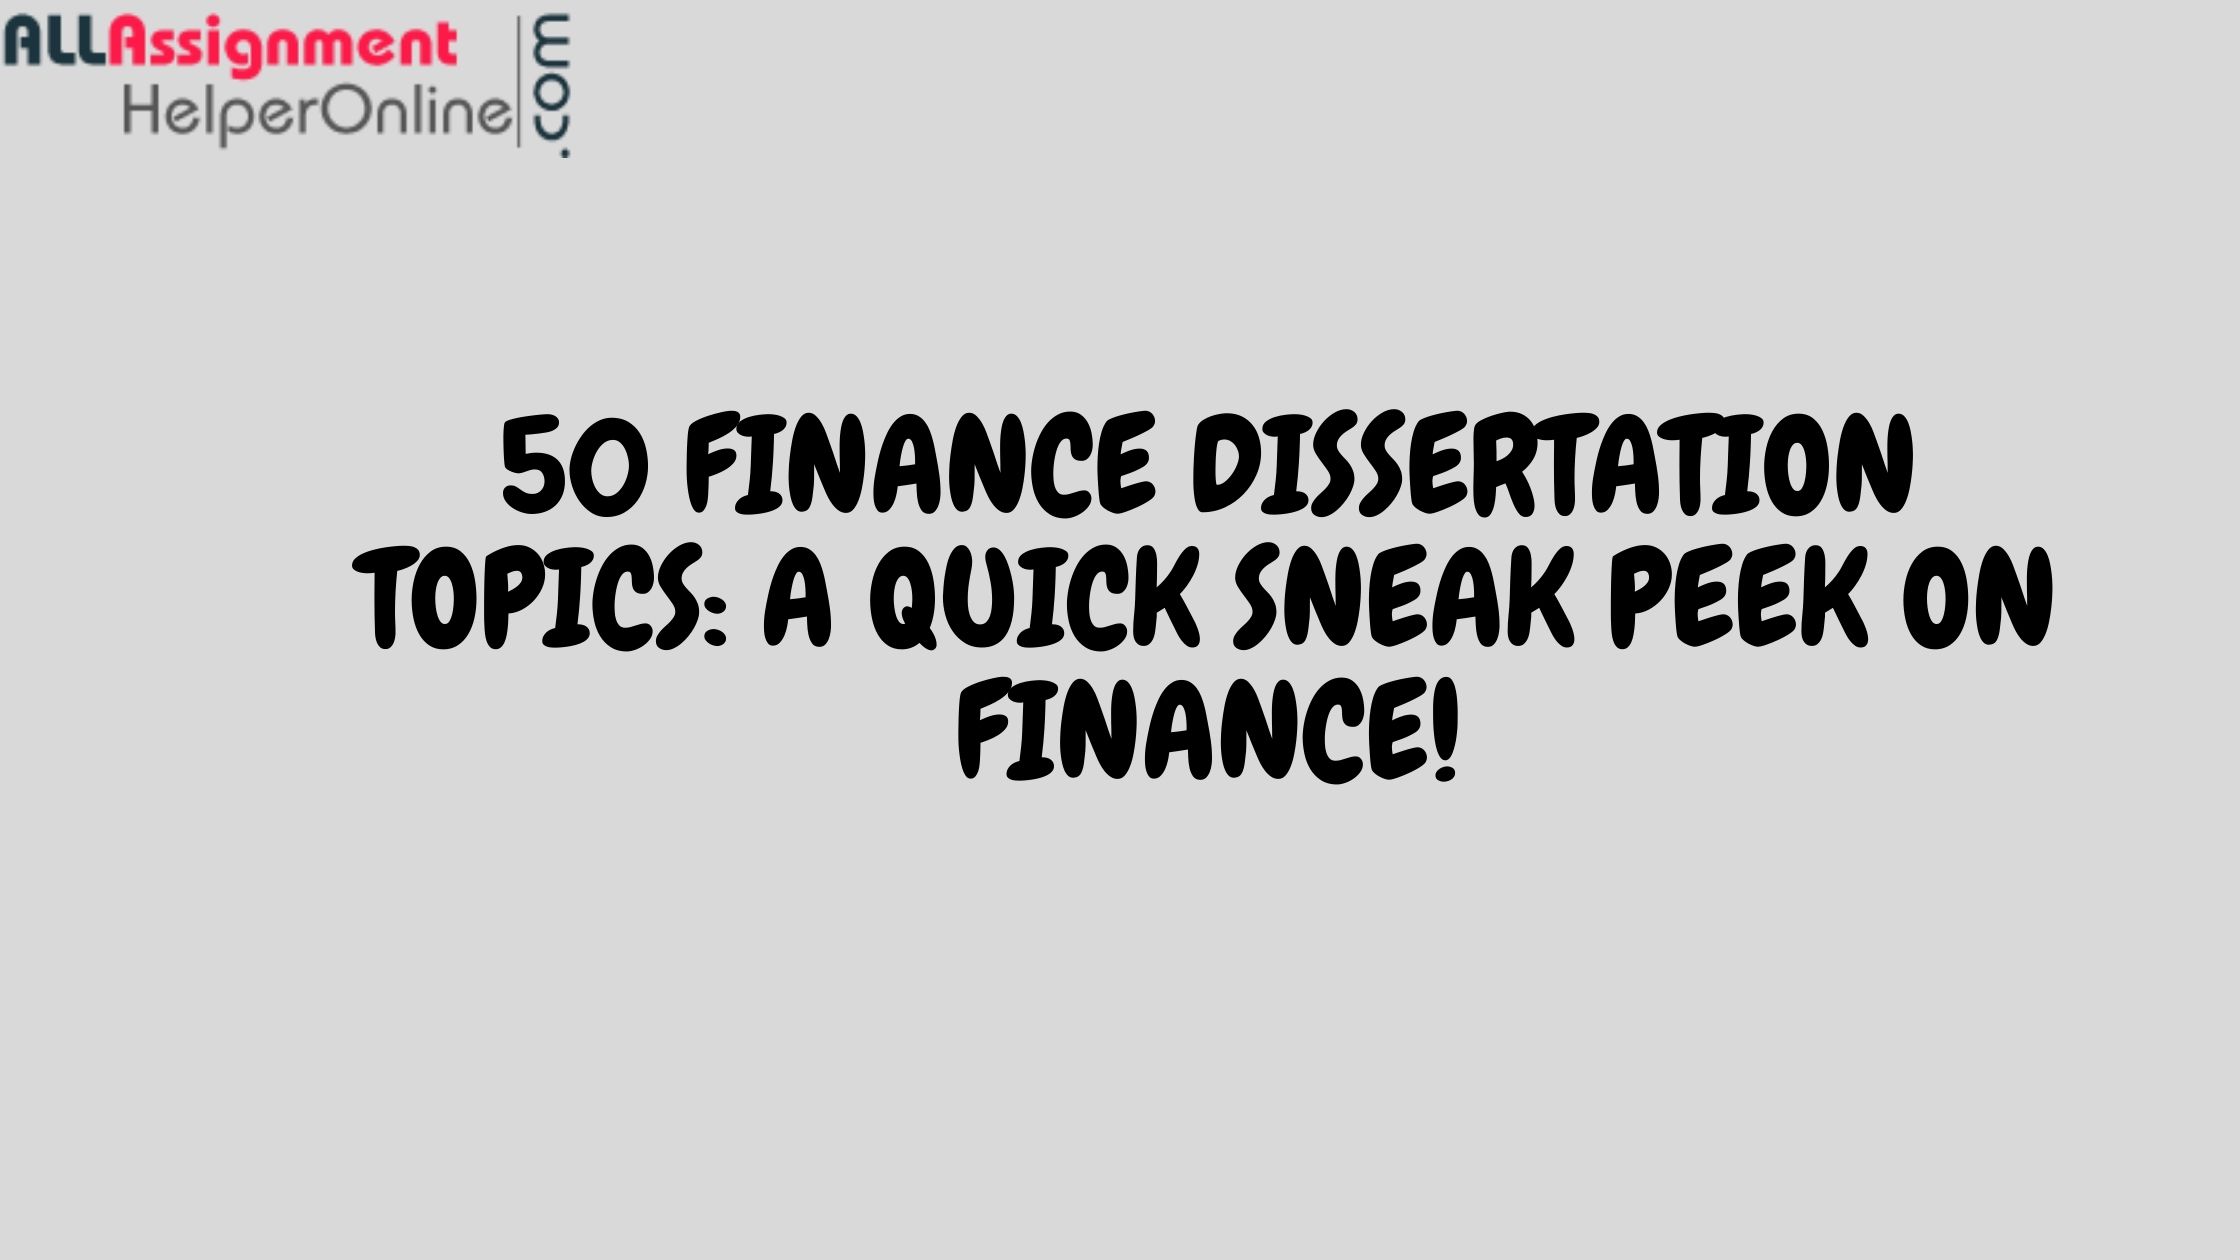 FINANCE DISSERTATION TOPICS